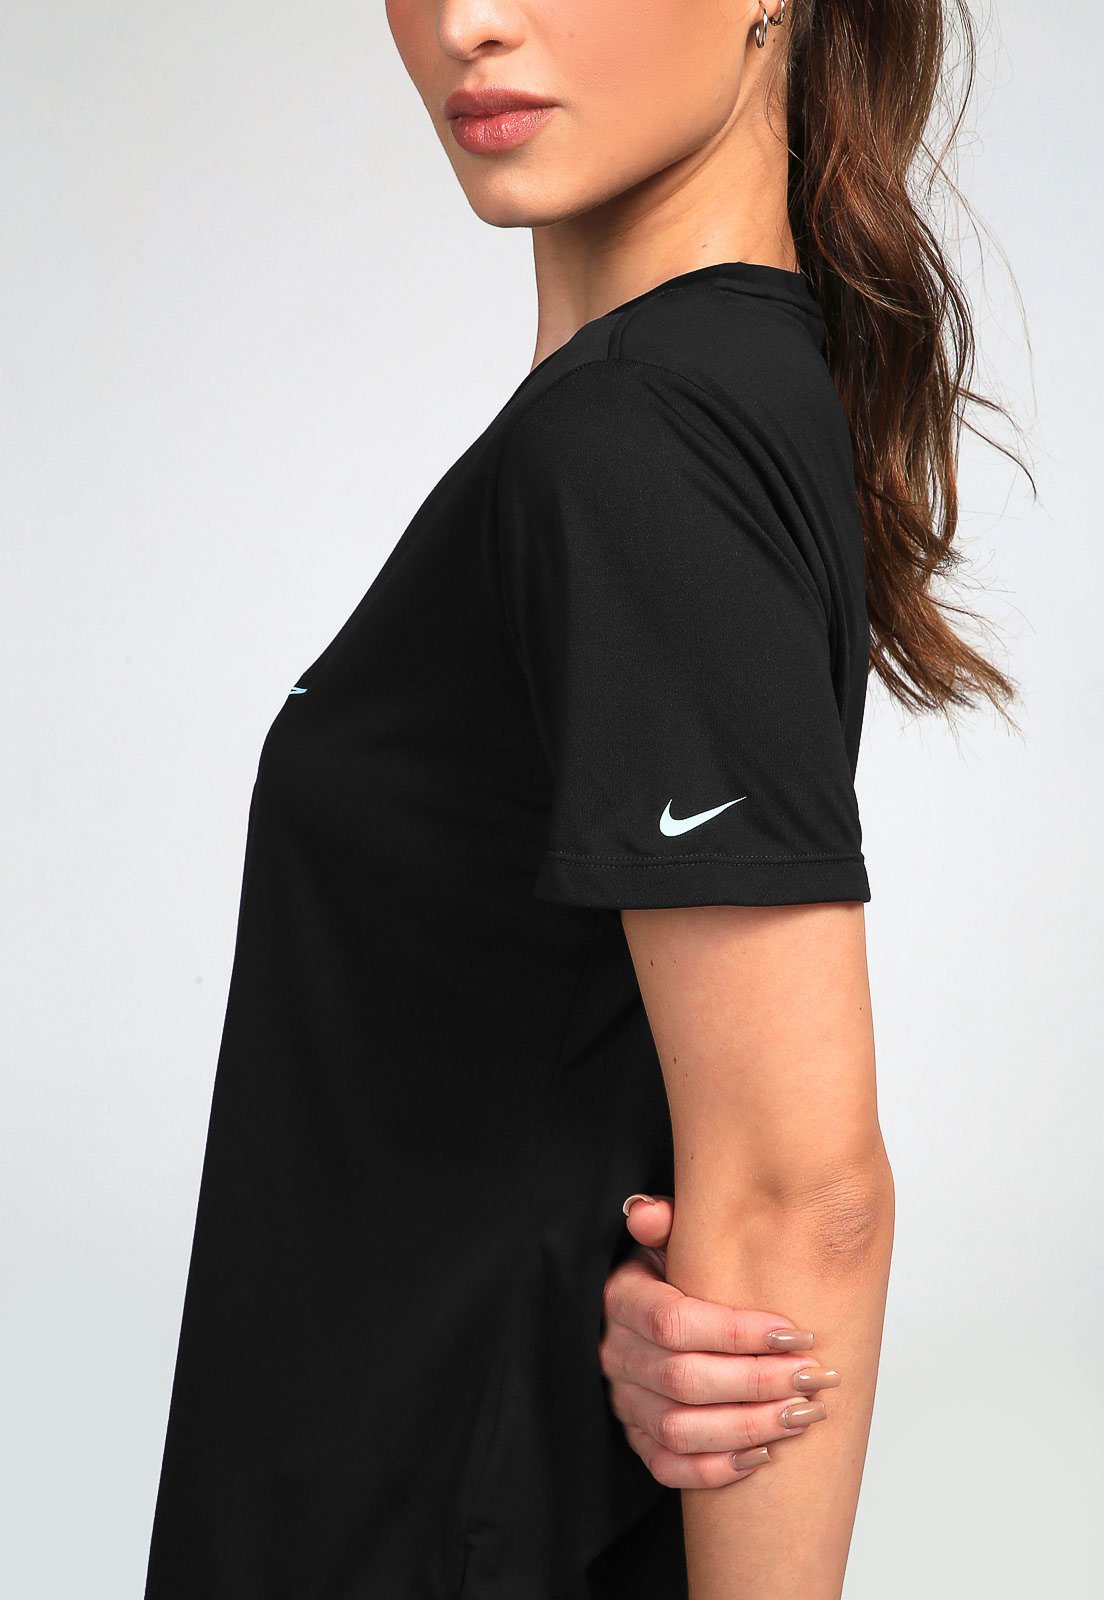 Camiseta Nike Nk One Ss Top Preta - Compre Agora | Kanui Brasil